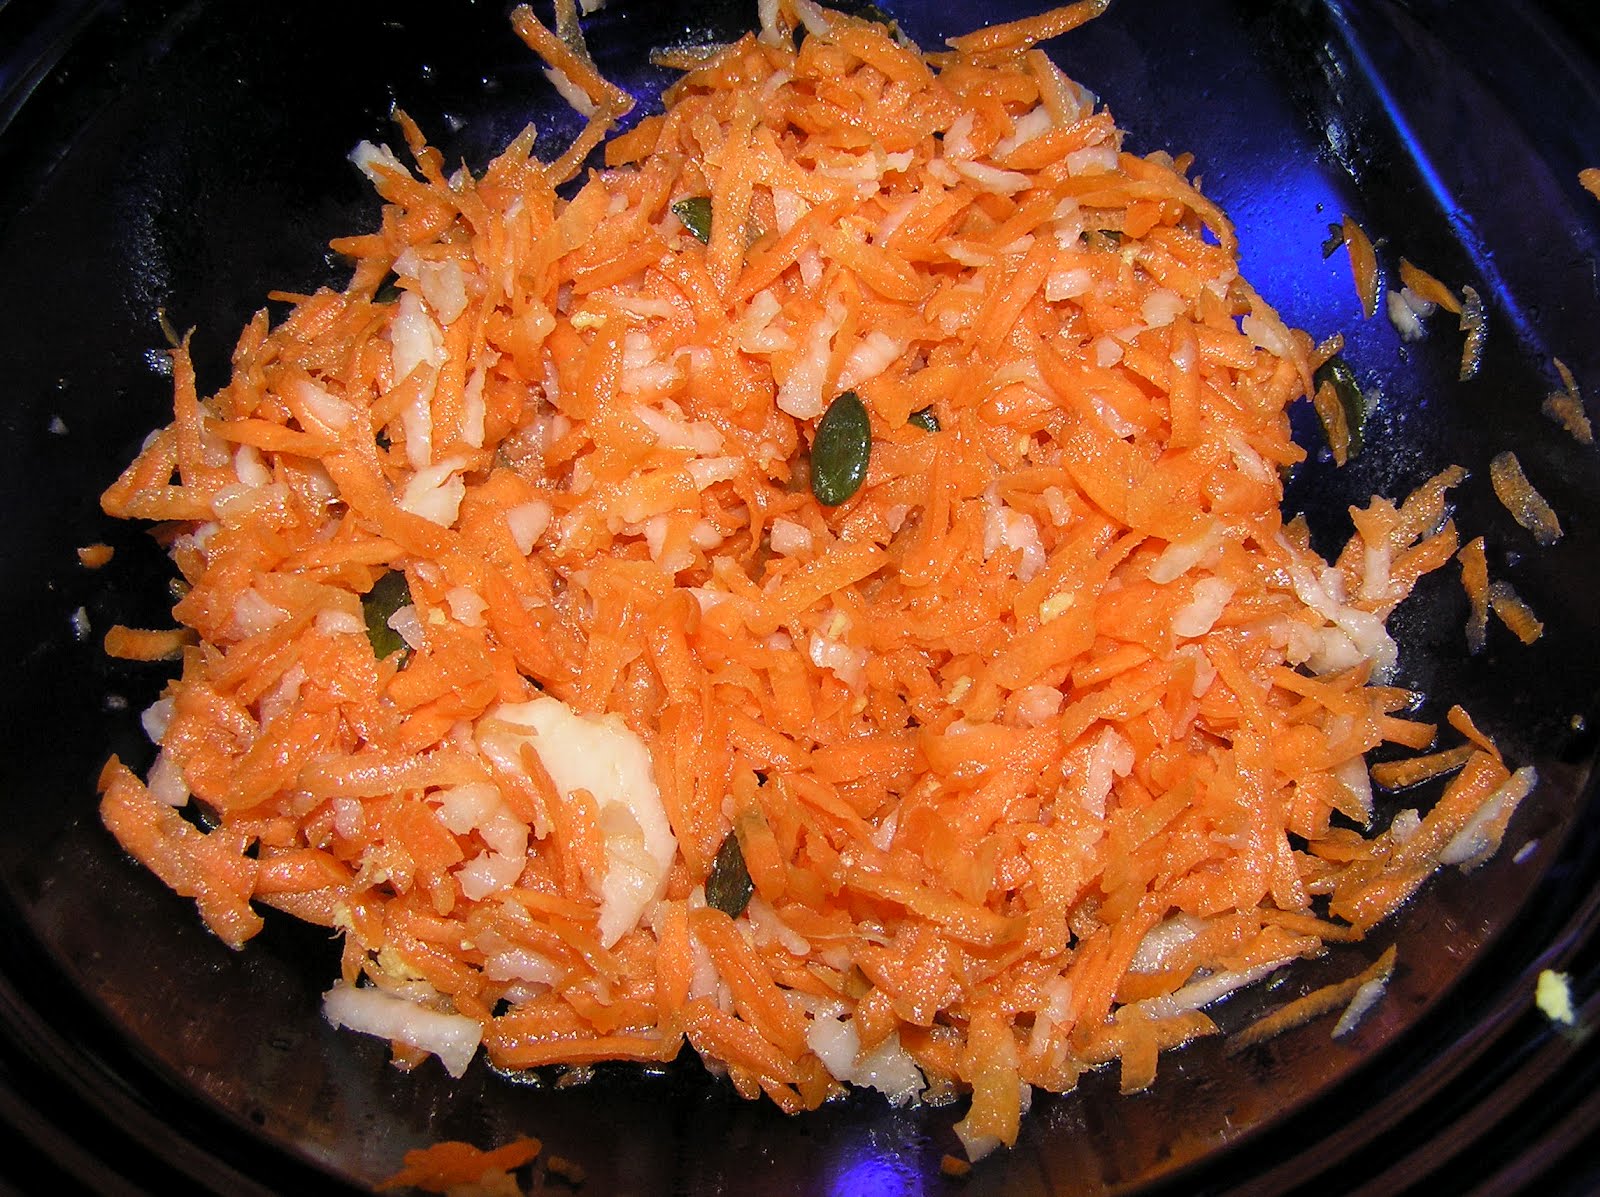 Karottensalat Mit Chinakohl — Rezepte Suchen